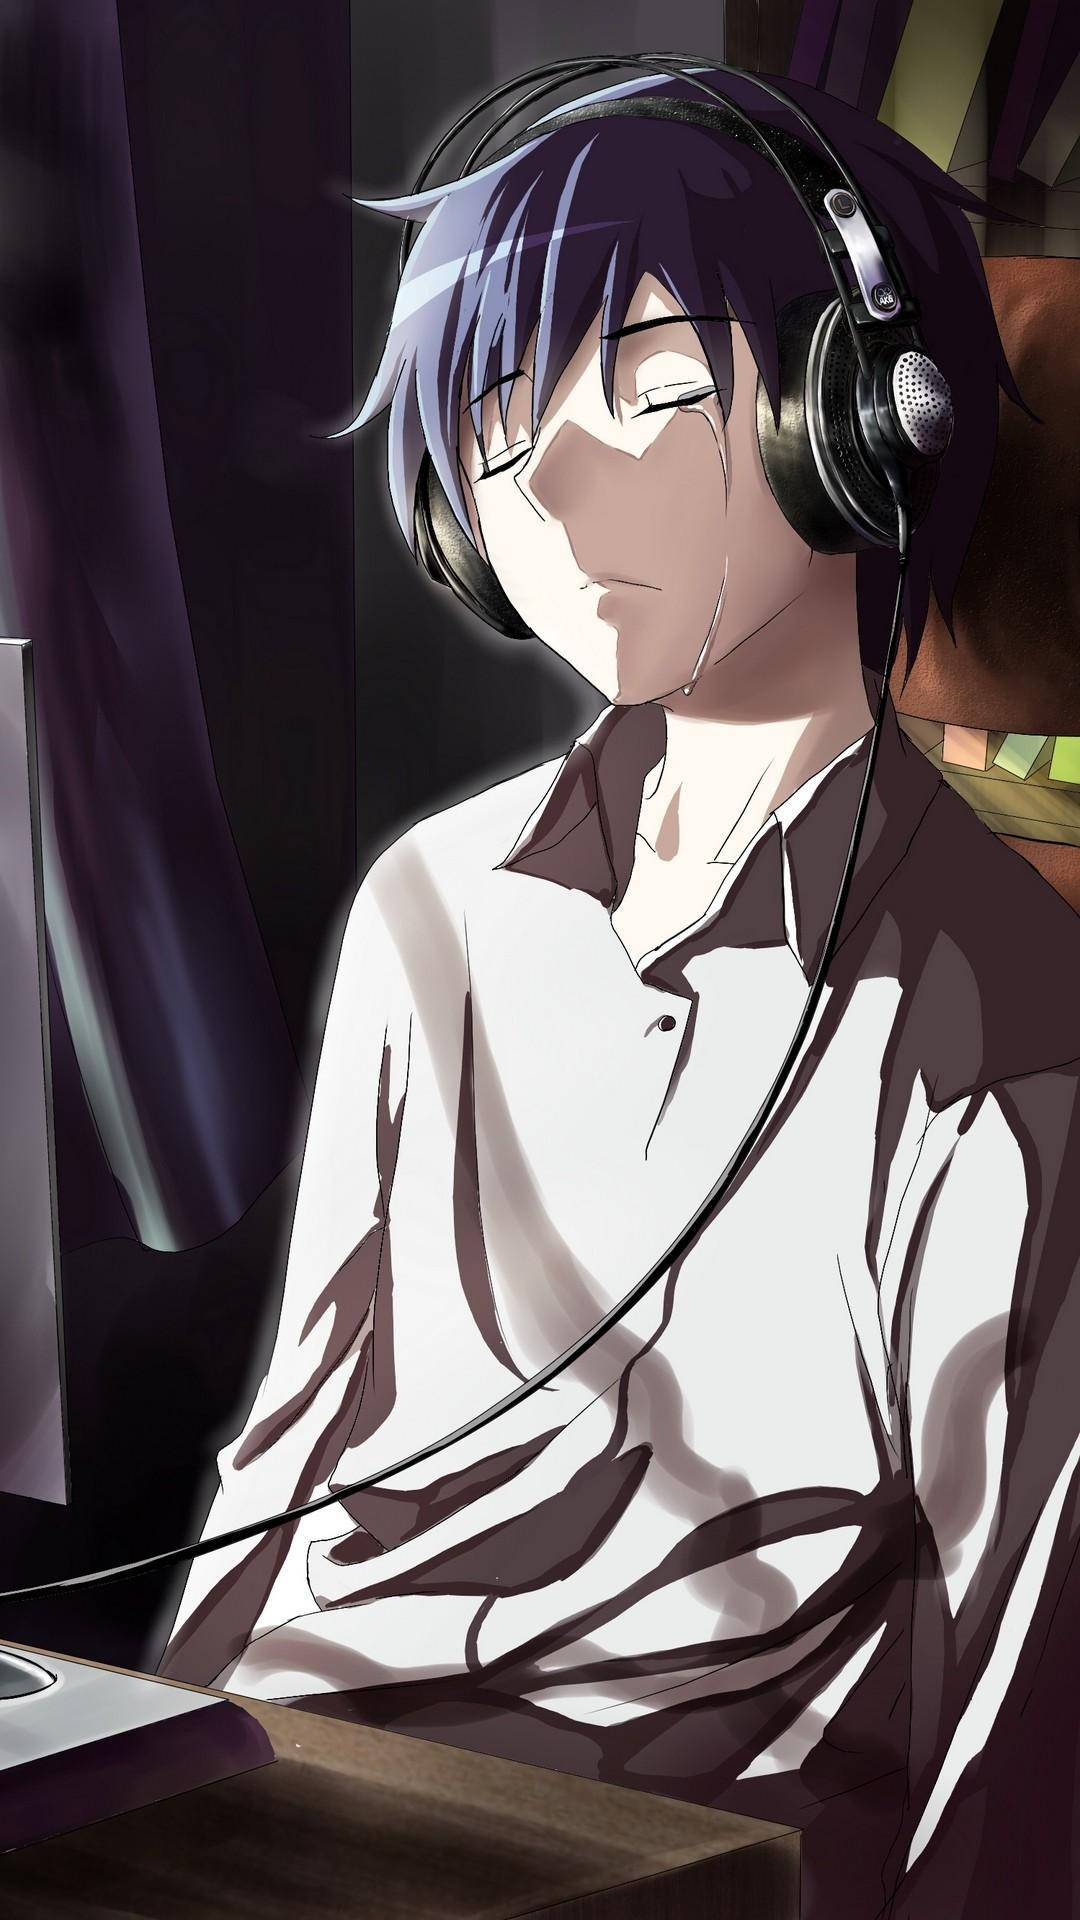 Sad Anime Boy With Headphones Background